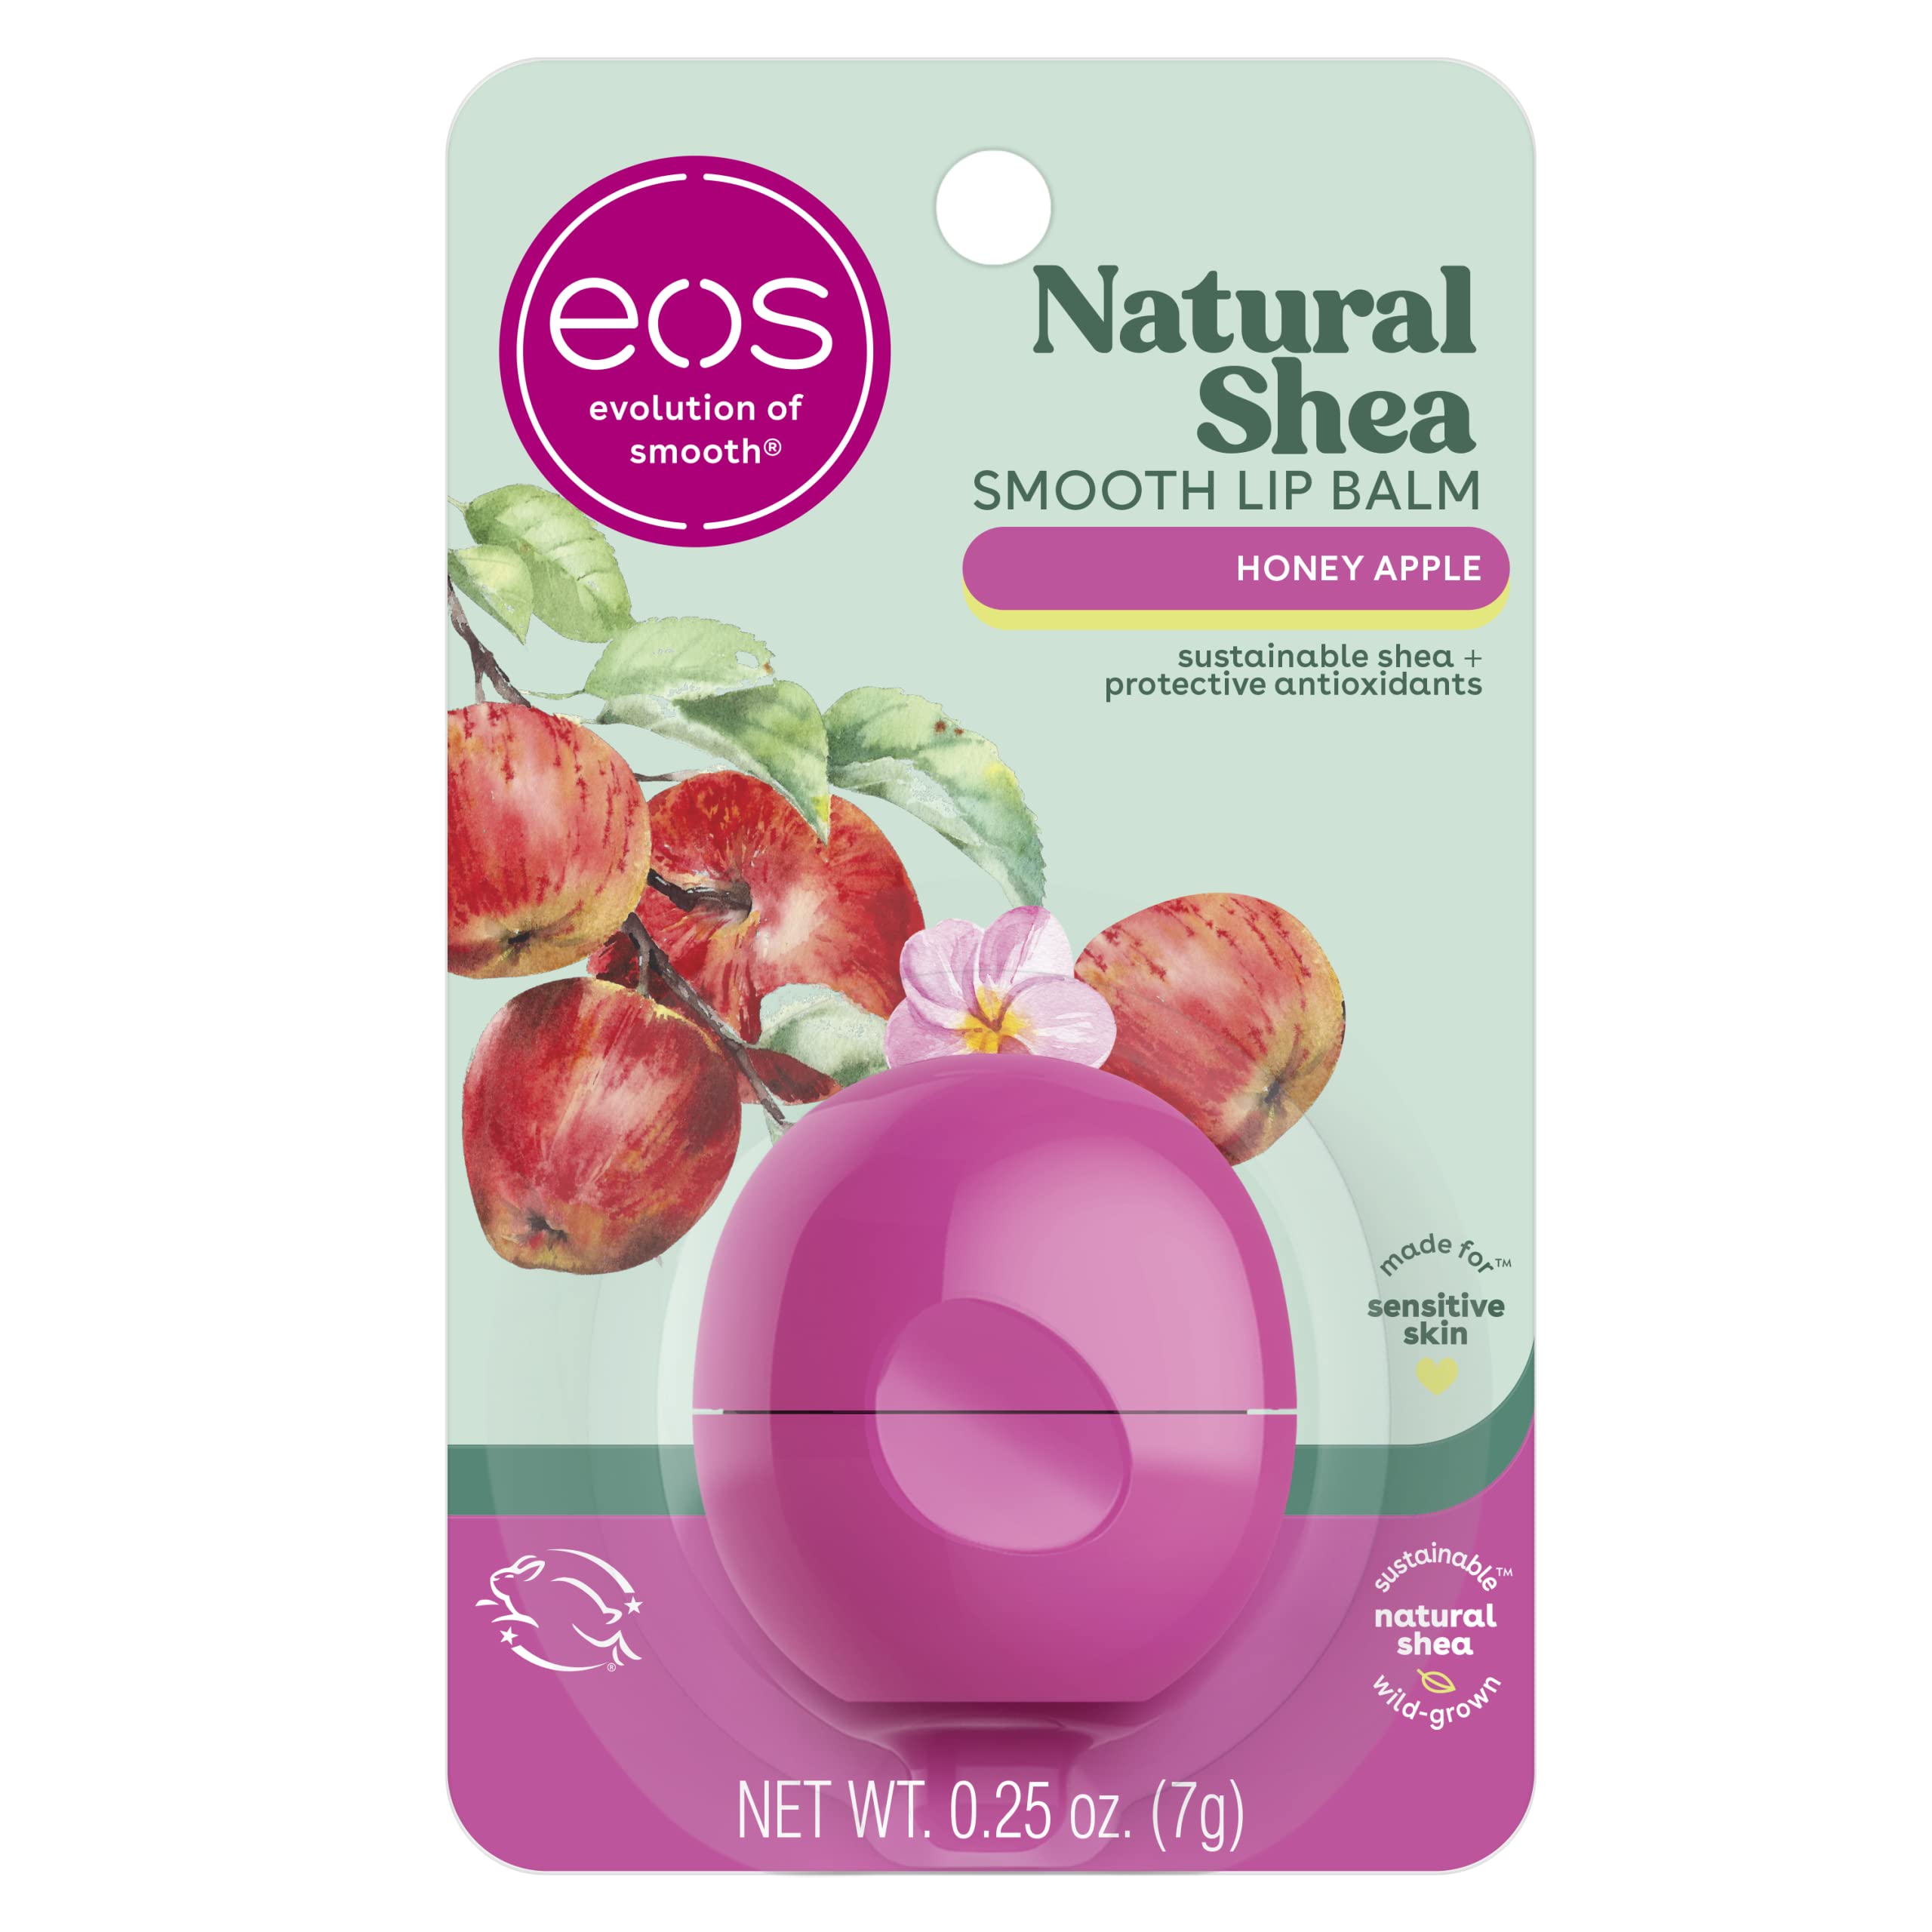 eos Natural Shea Lip Balm- Honey Apple, All-Day Moisture, Made for Sensitive Skin, Shea Lip Care Products, 0.25 oz